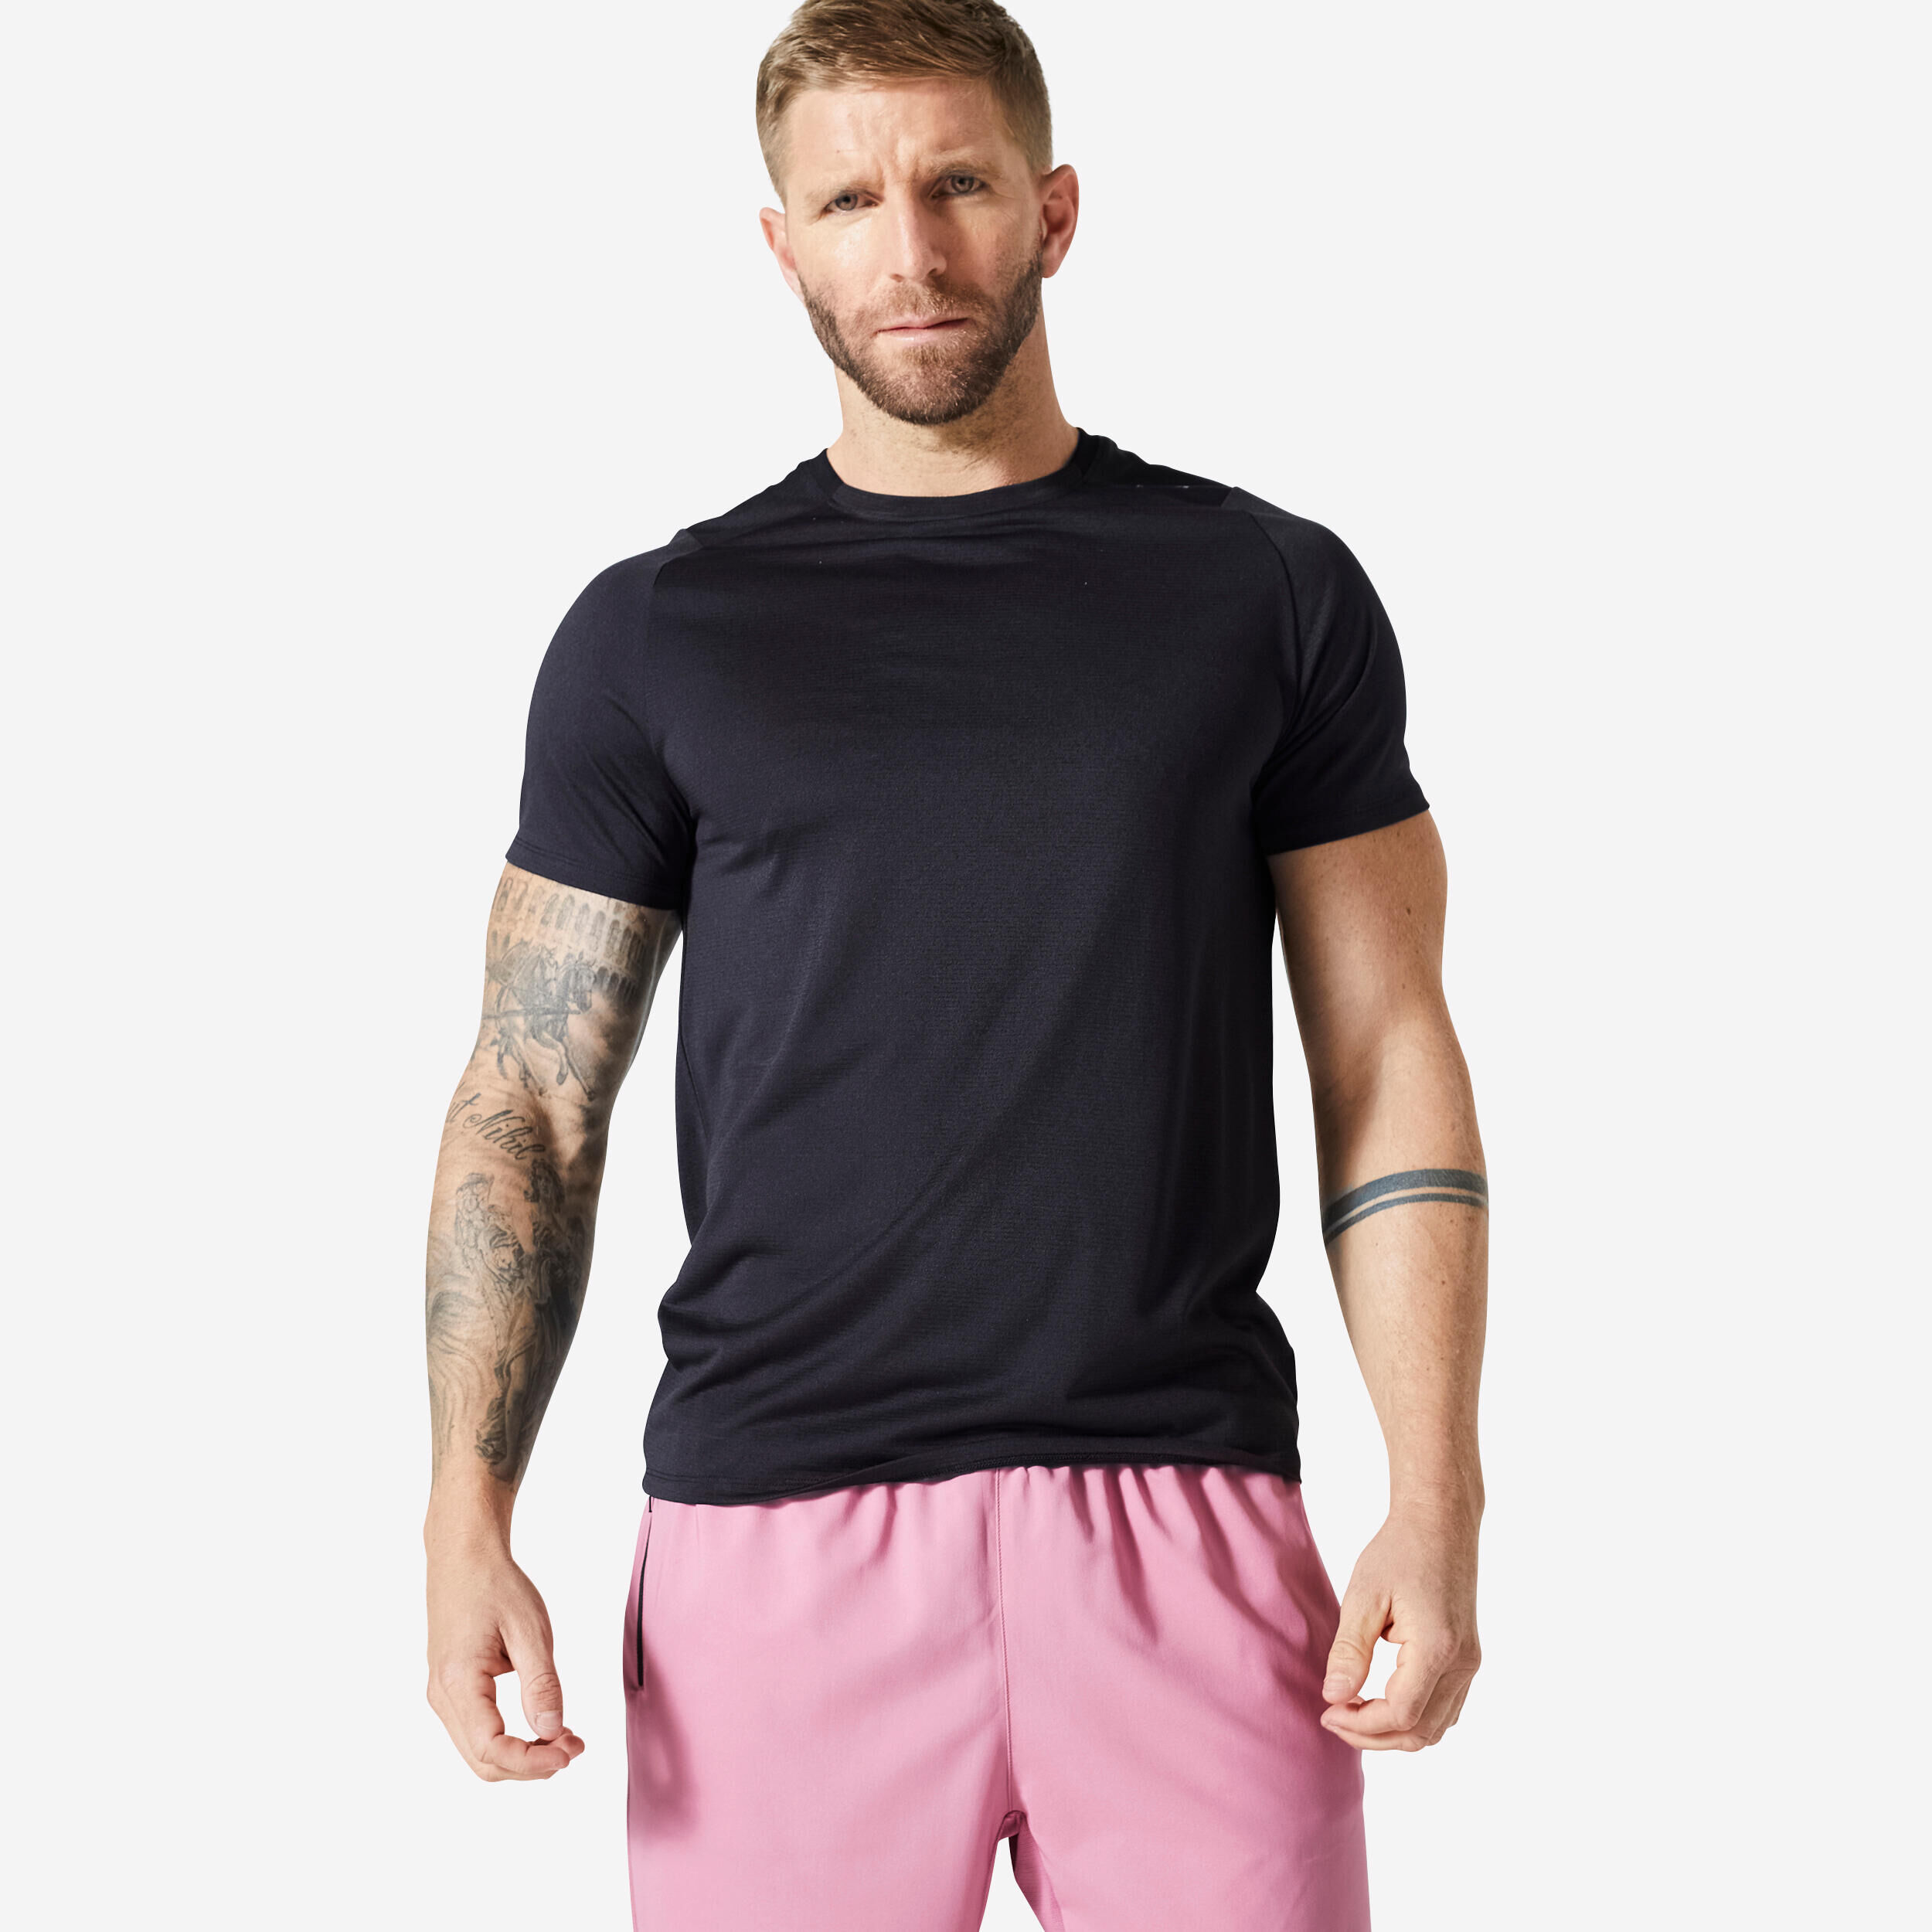 DOMYOS Men's Breathable Regular Fitness Crew Neck T-Shirt - Black